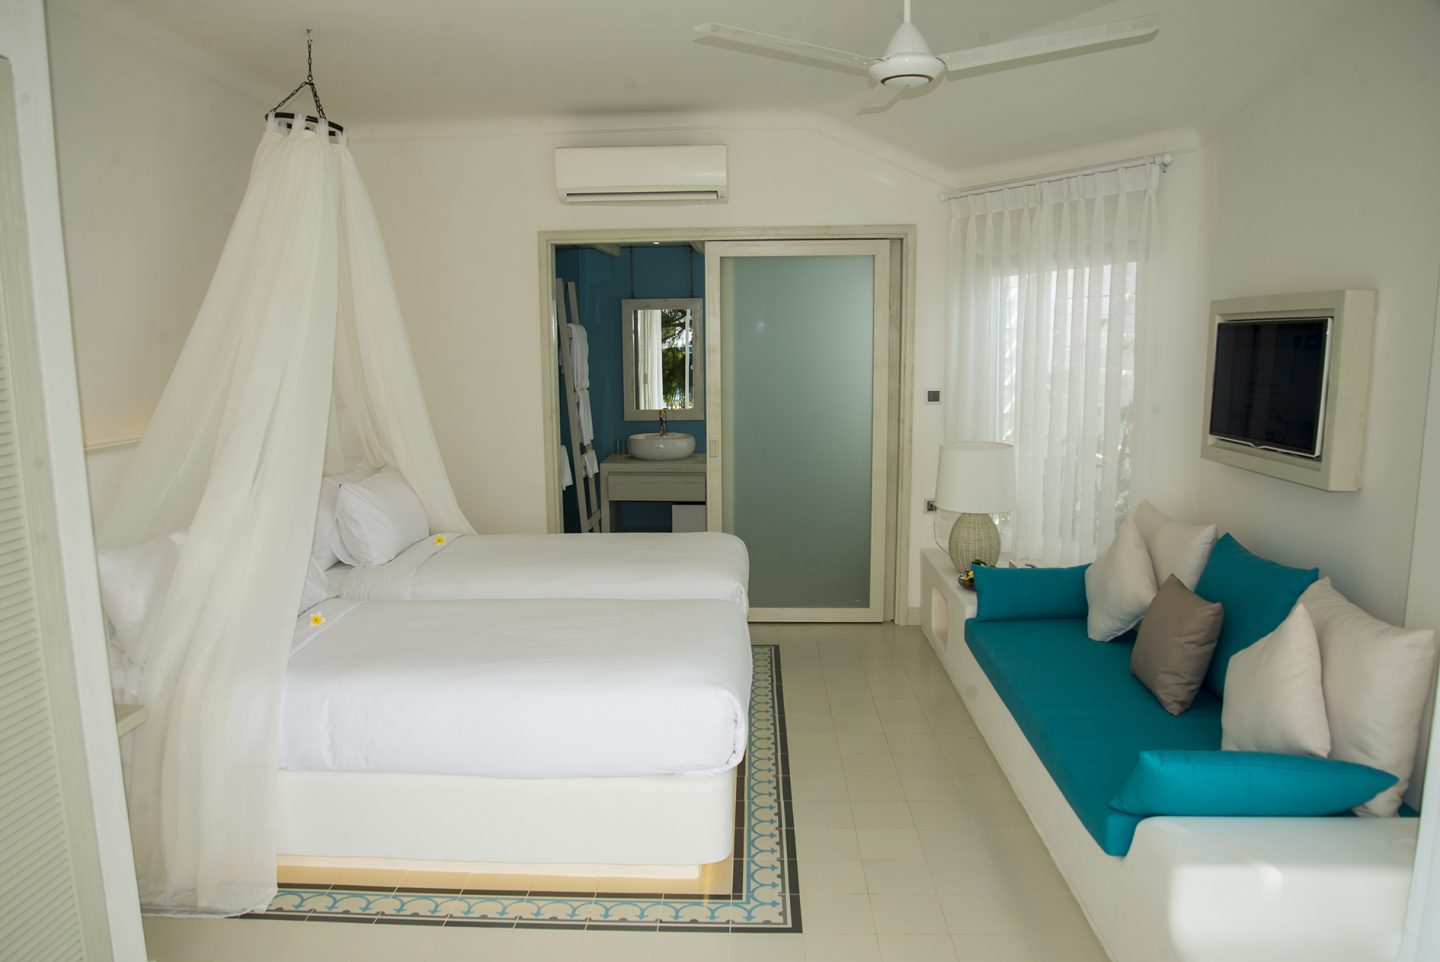 Anoasis Resort: Có 1 Santoni tại biển Long Hải 